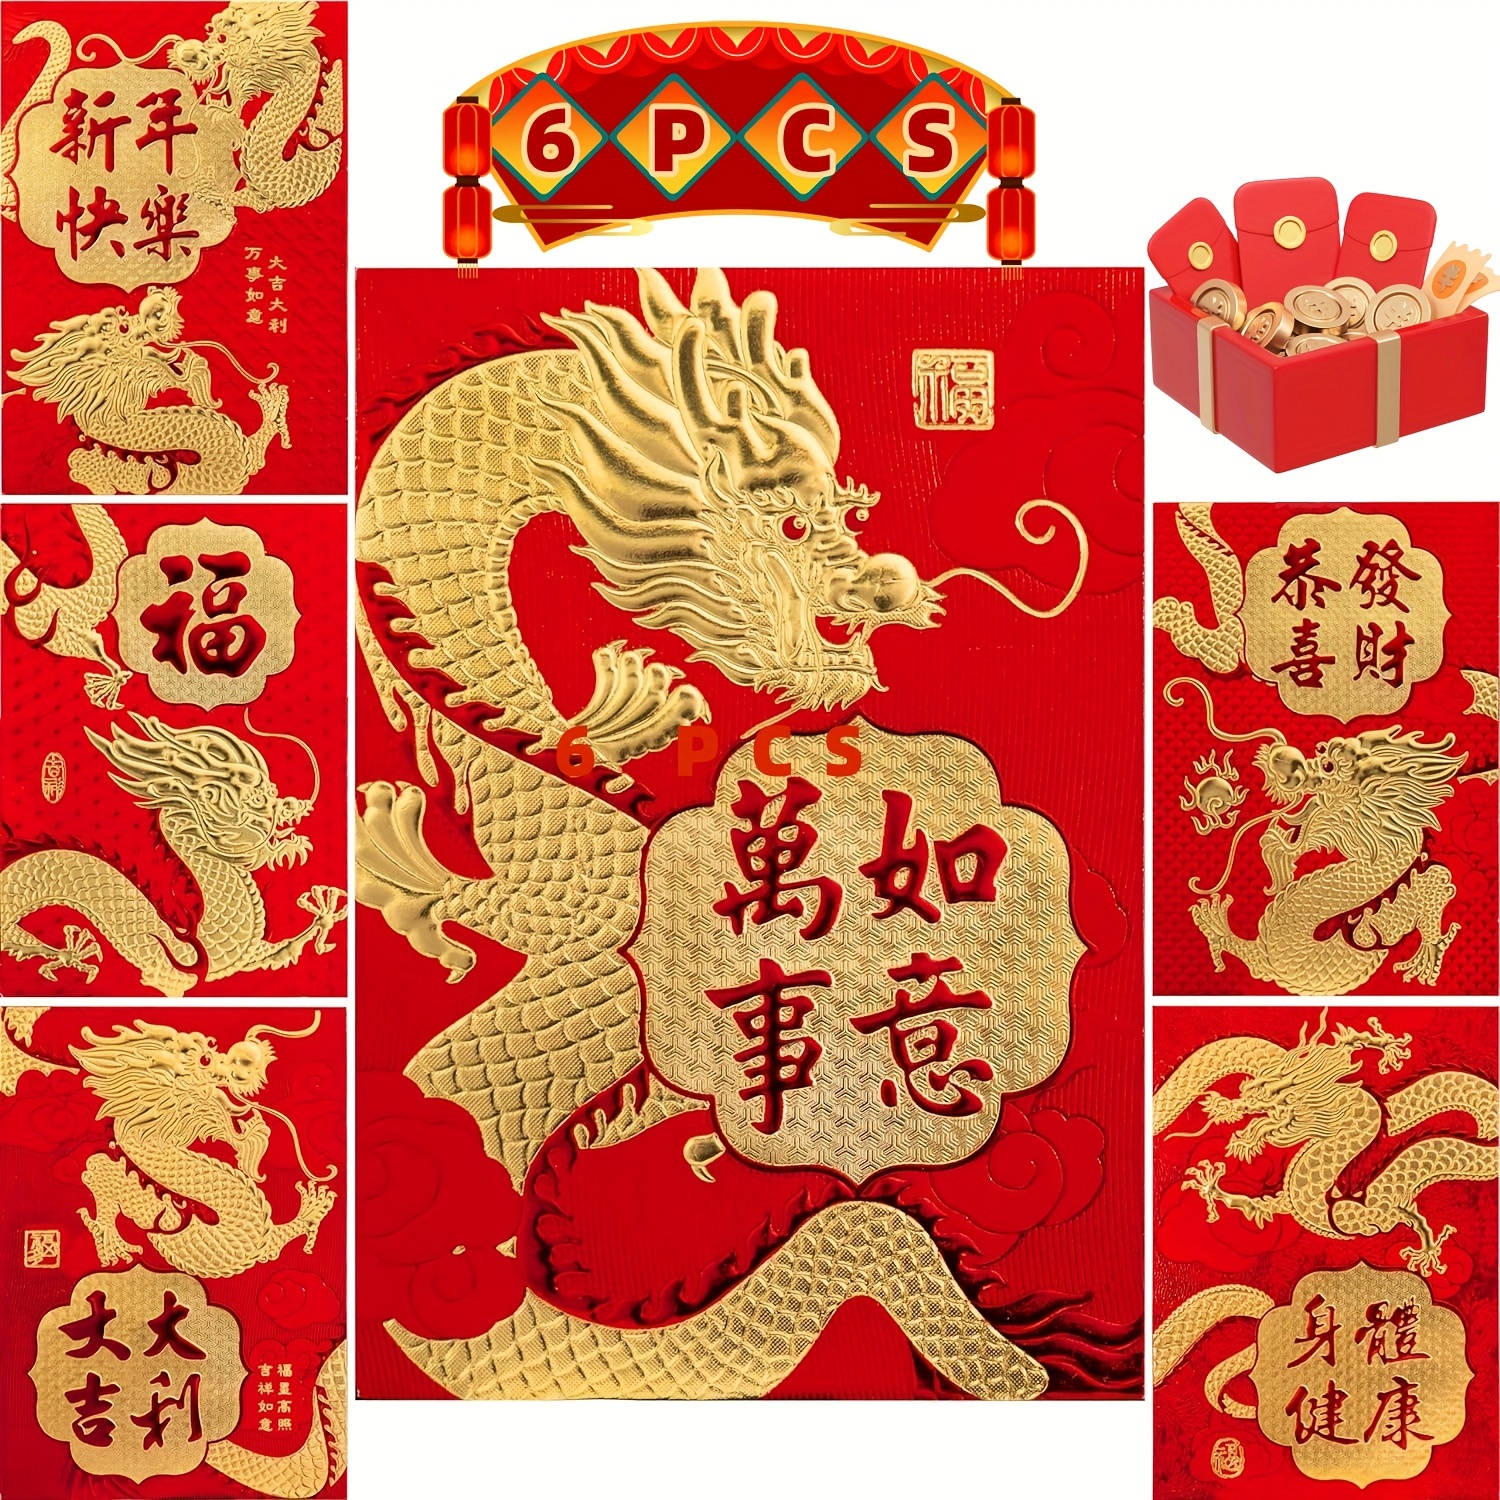 Creative Red Envelopes Birthday, Chinese Wedding Red Envelope